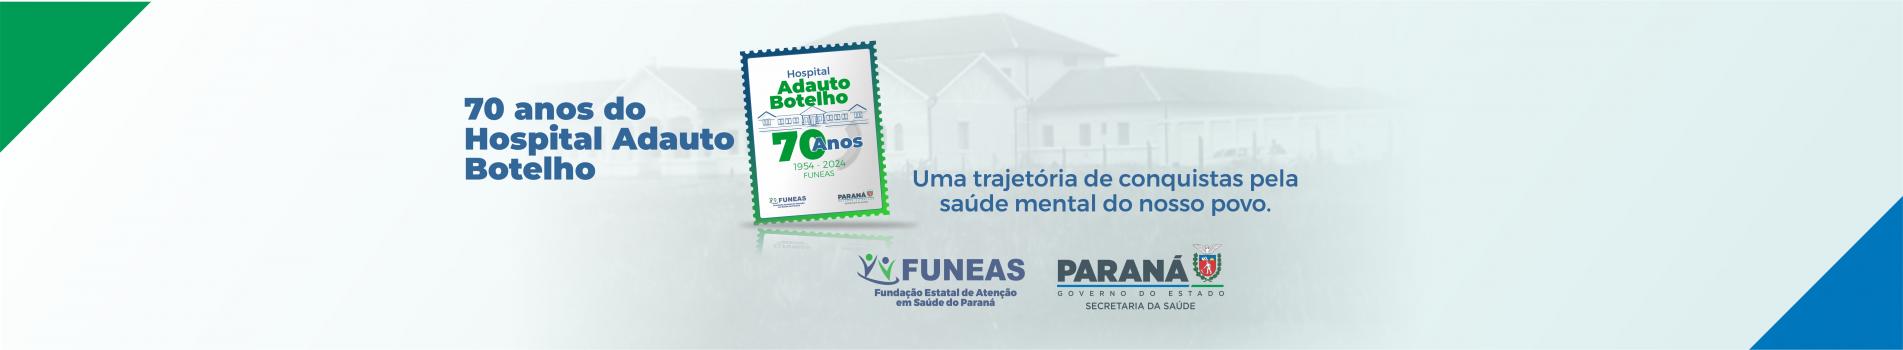 Hospital Adauto Botelho 70 anos